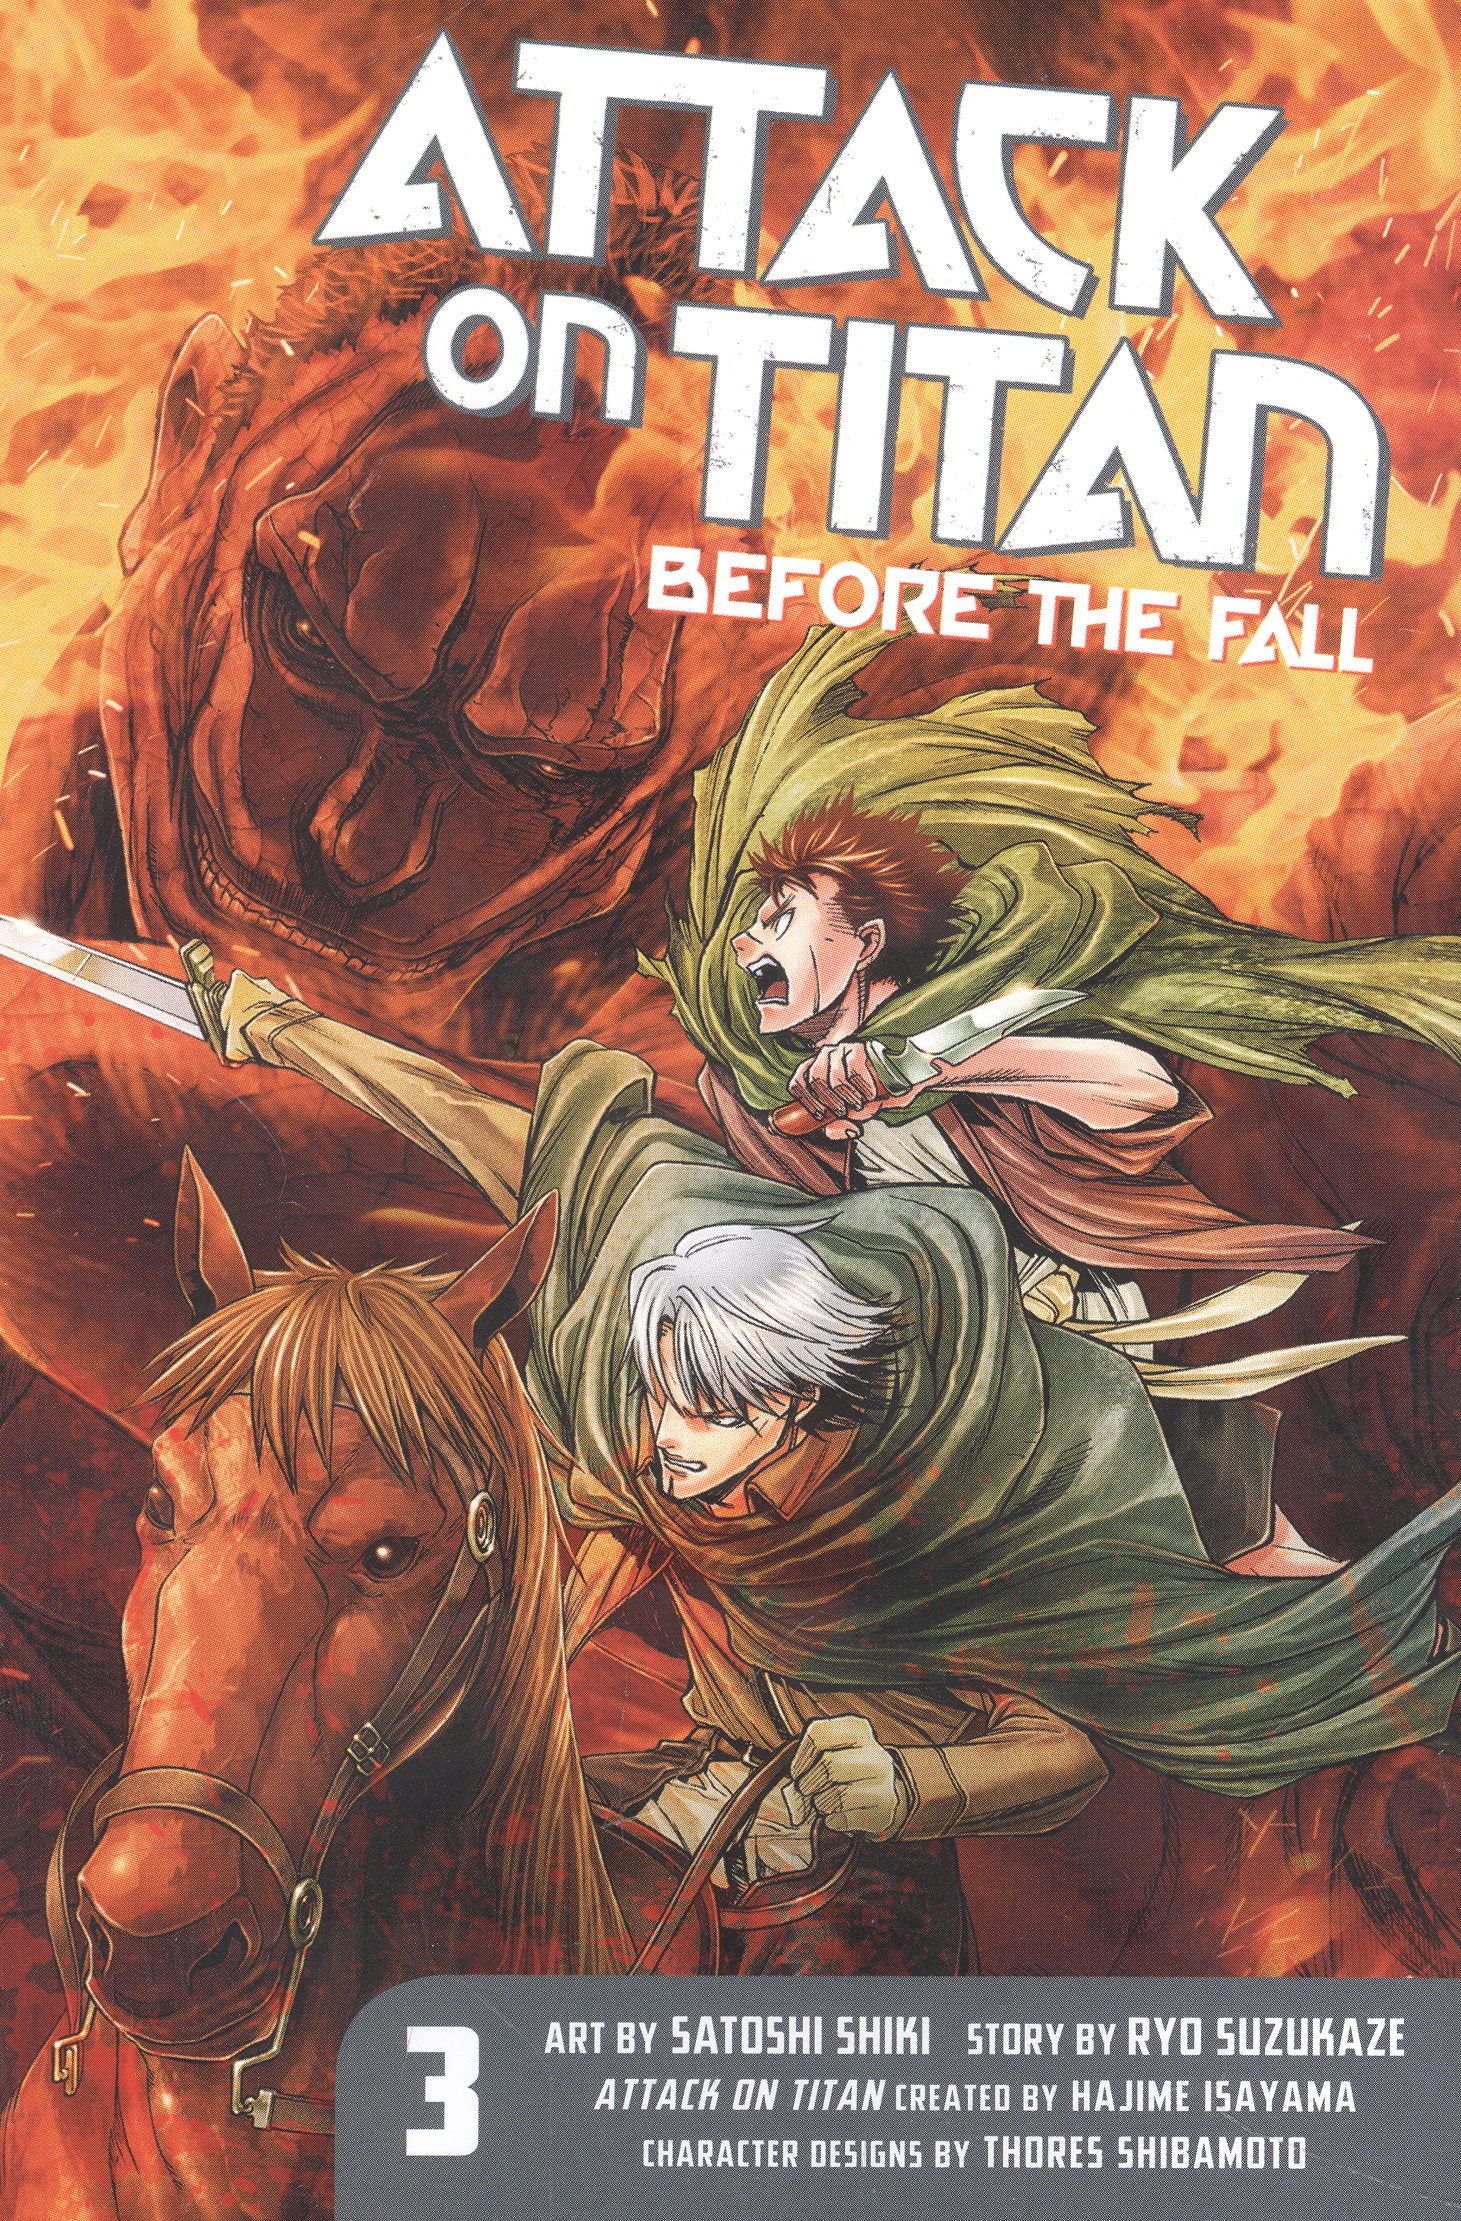 davies brenda the girl behind the gates Isayama Hajime Attack on Titan: Before the Fall 3